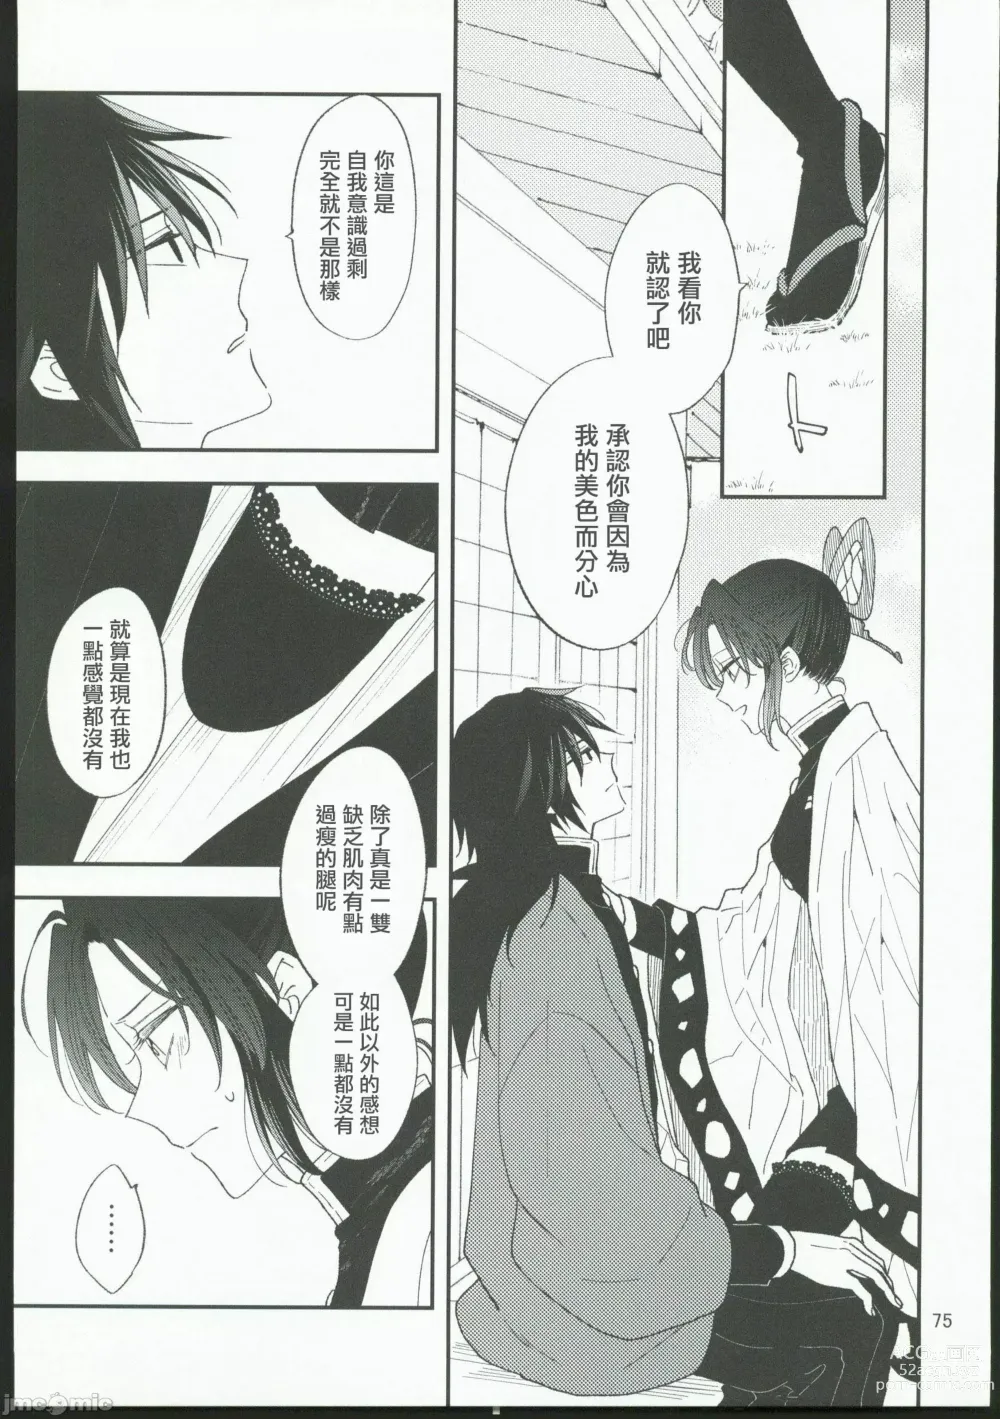 Page 74 of doujinshi Koi Tsumugi